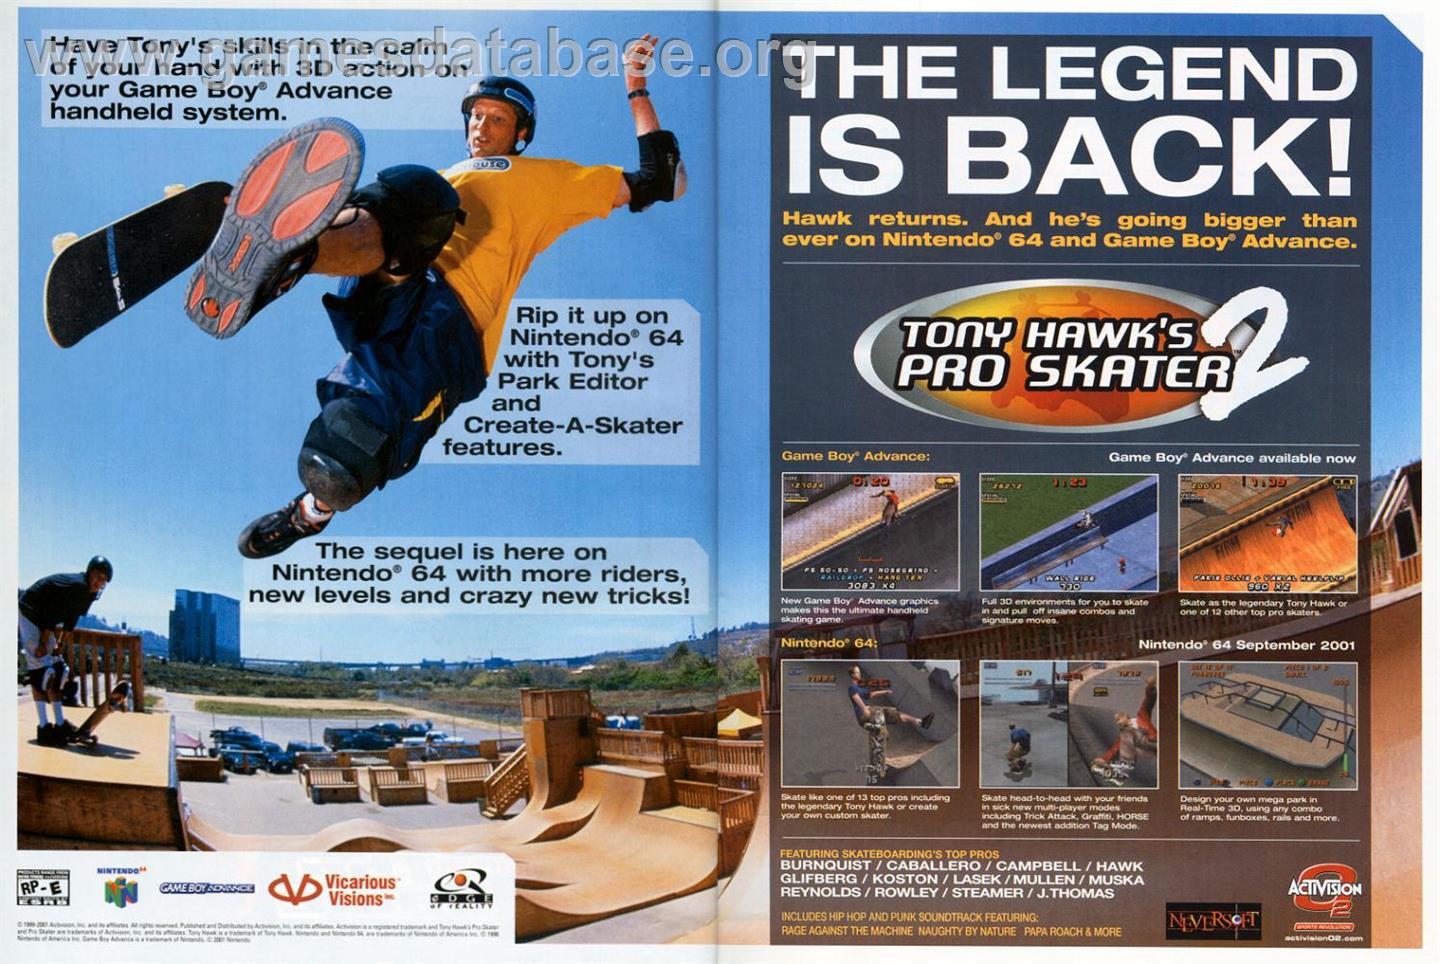 Tony Hawk's Pro Skater 2 - Nintendo Game Boy Advance - Artwork - Advert